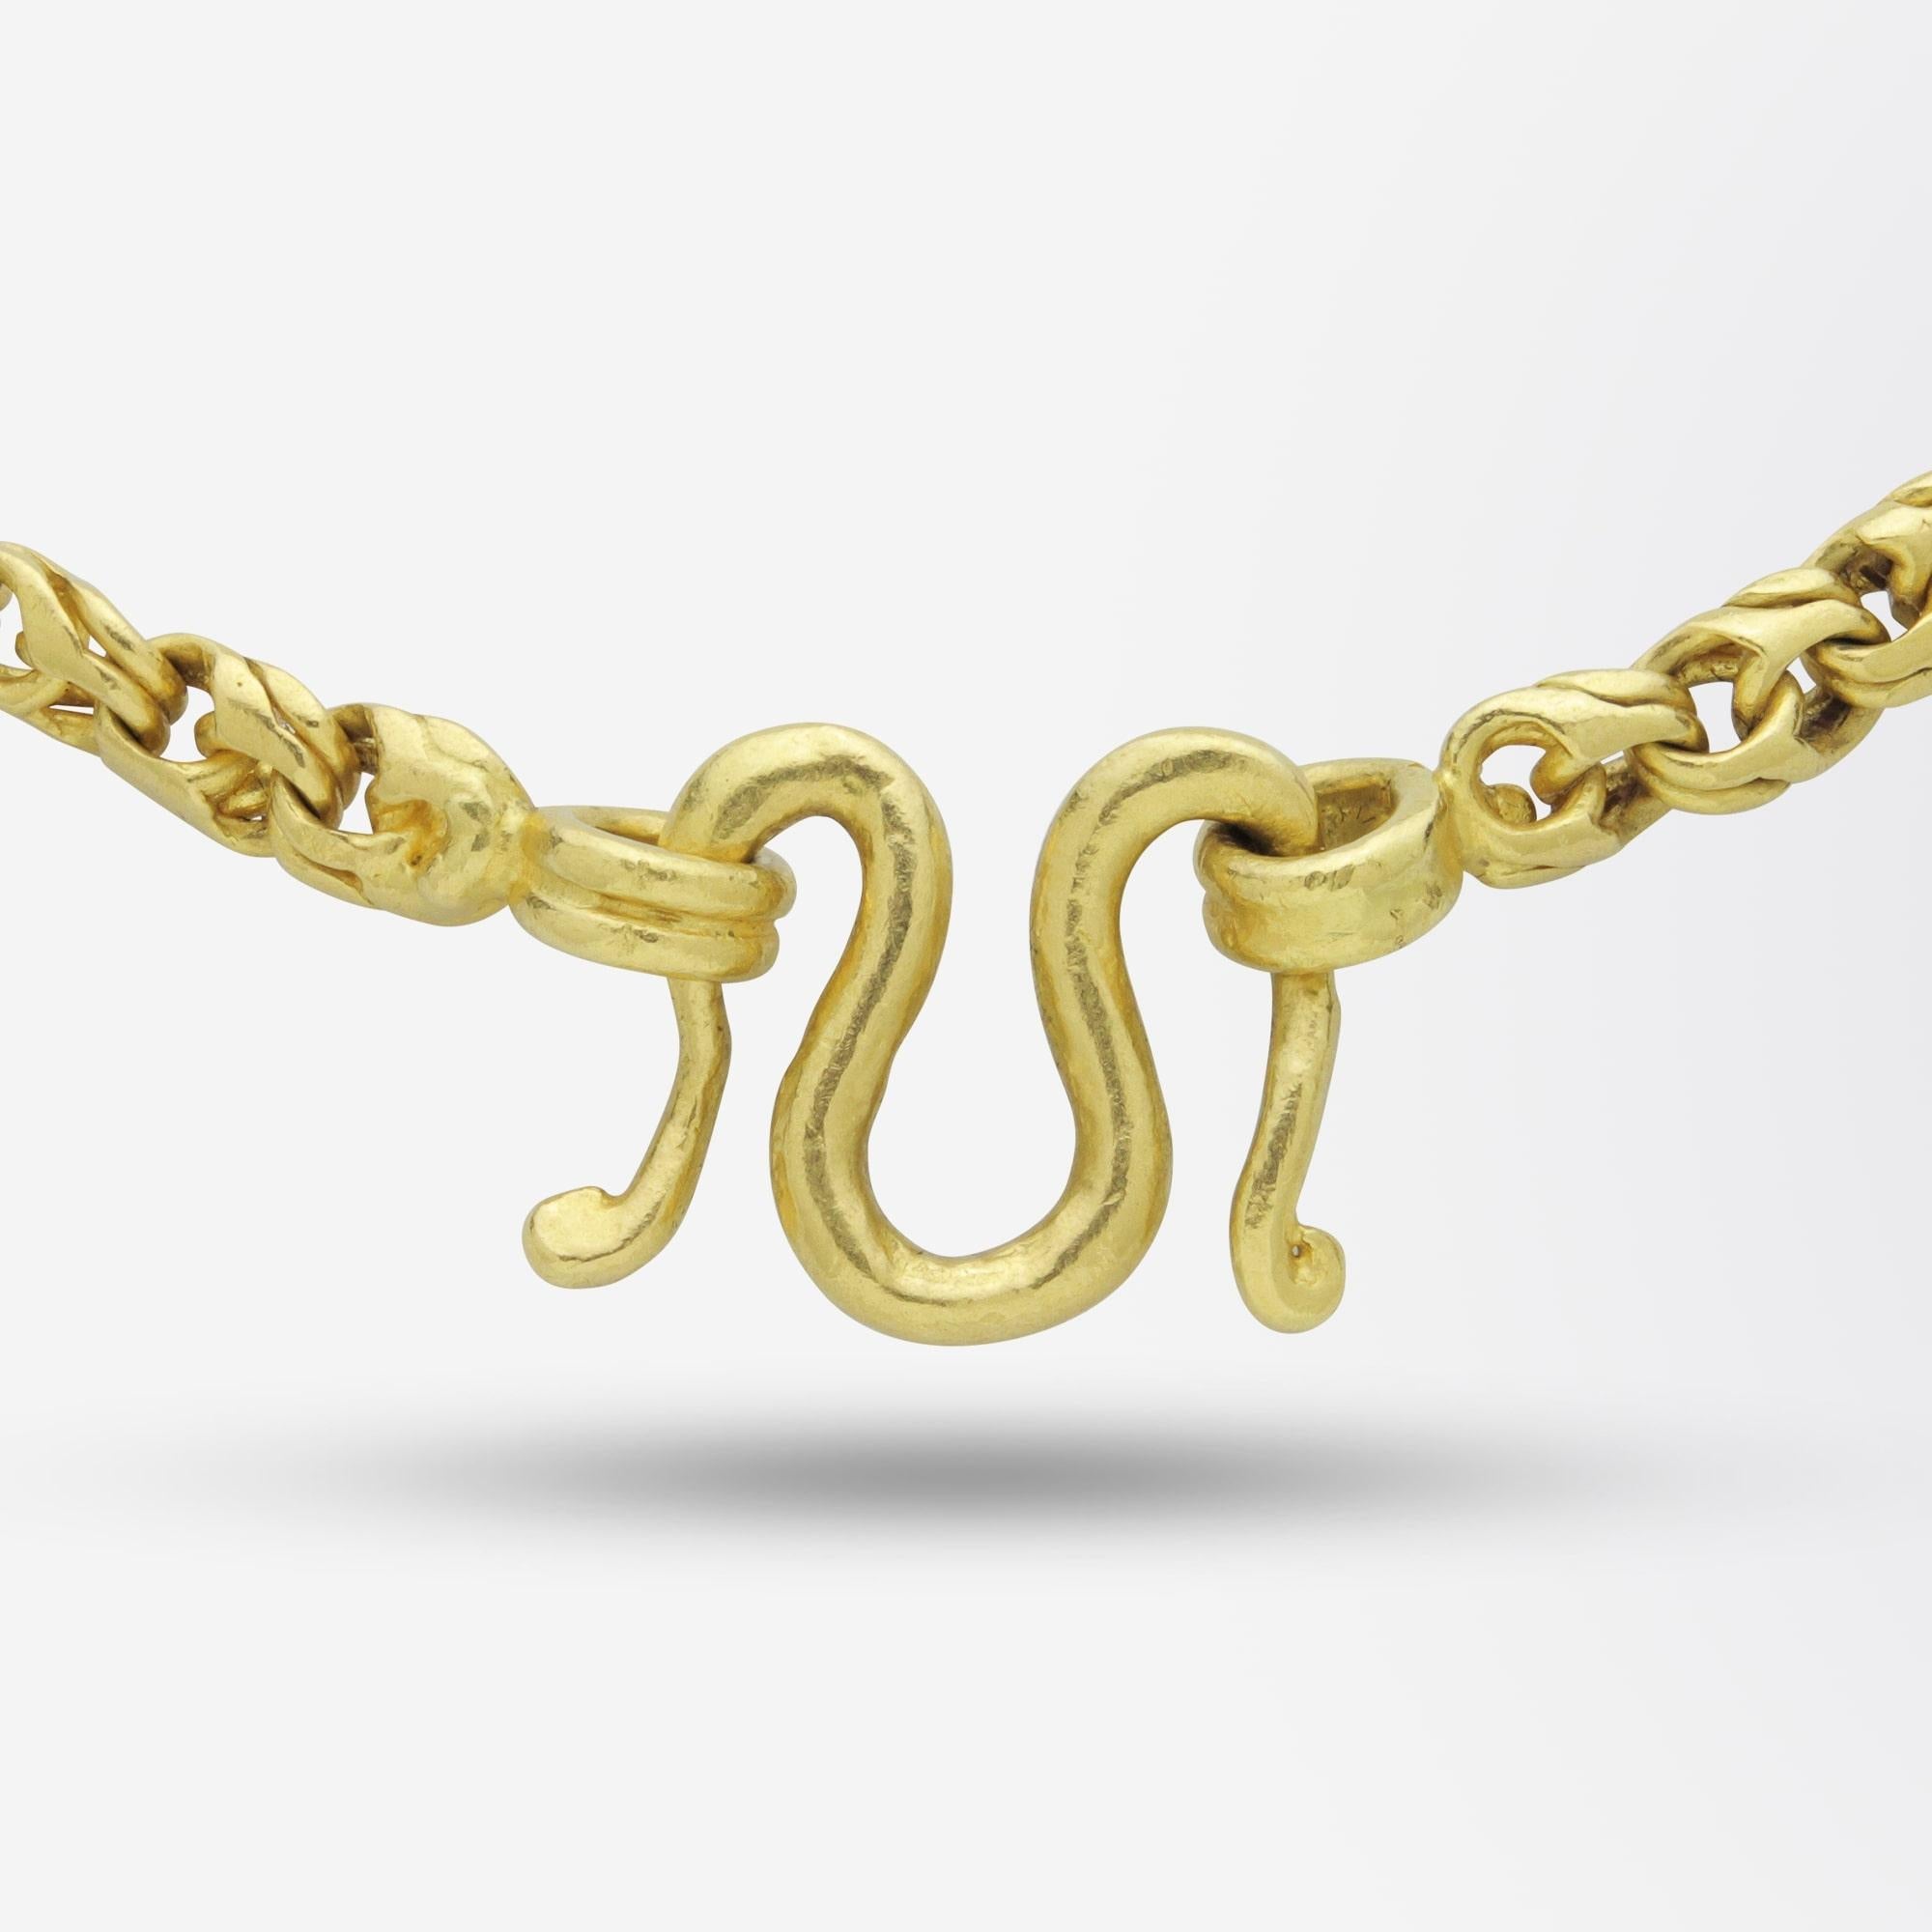 23 carat gold chain price